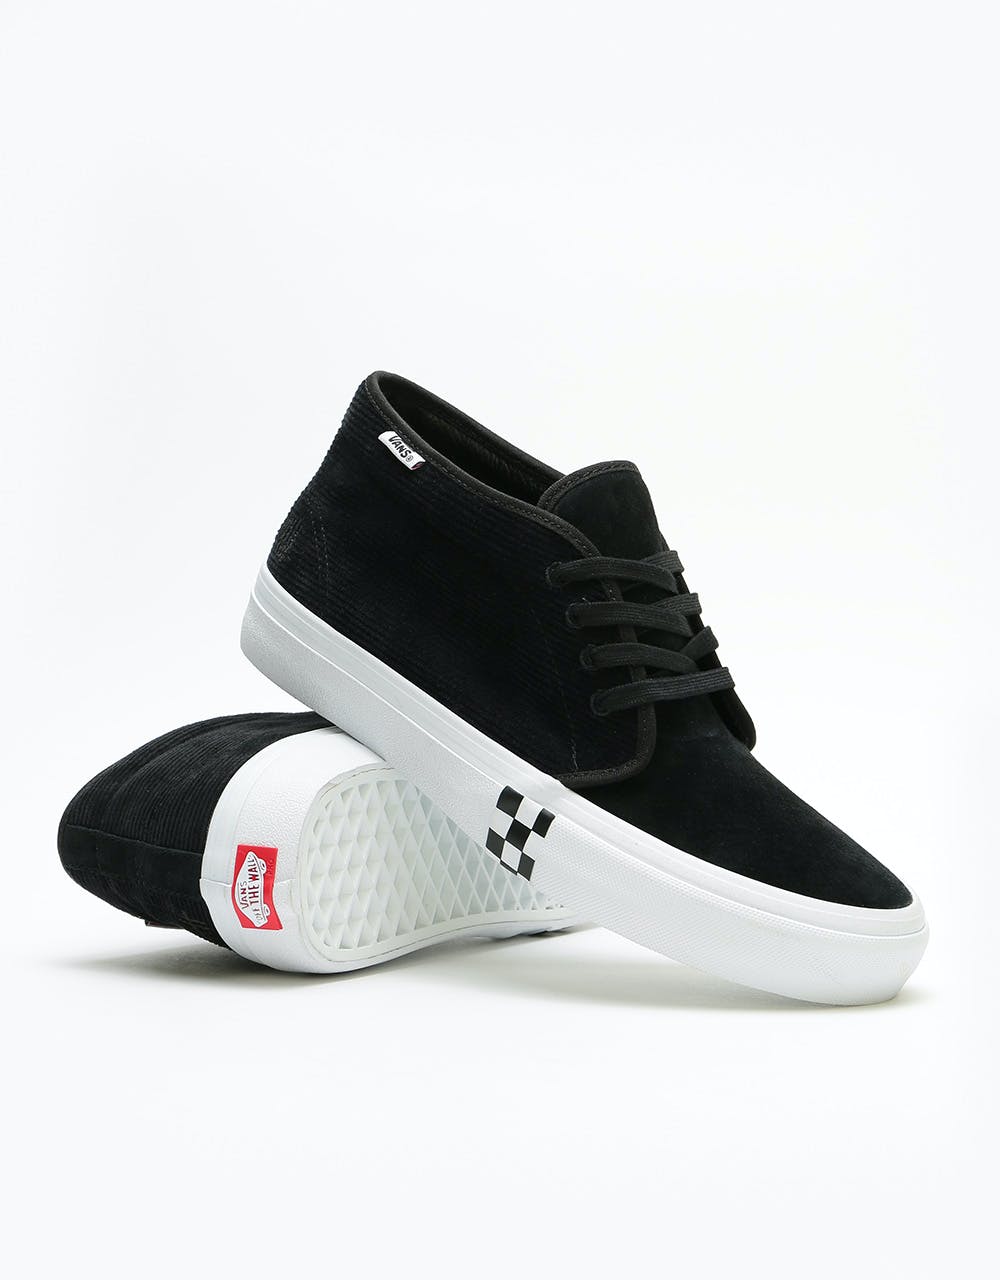 Vans Chukka Pro Skate Shoes - (Wainwright) Black/True White